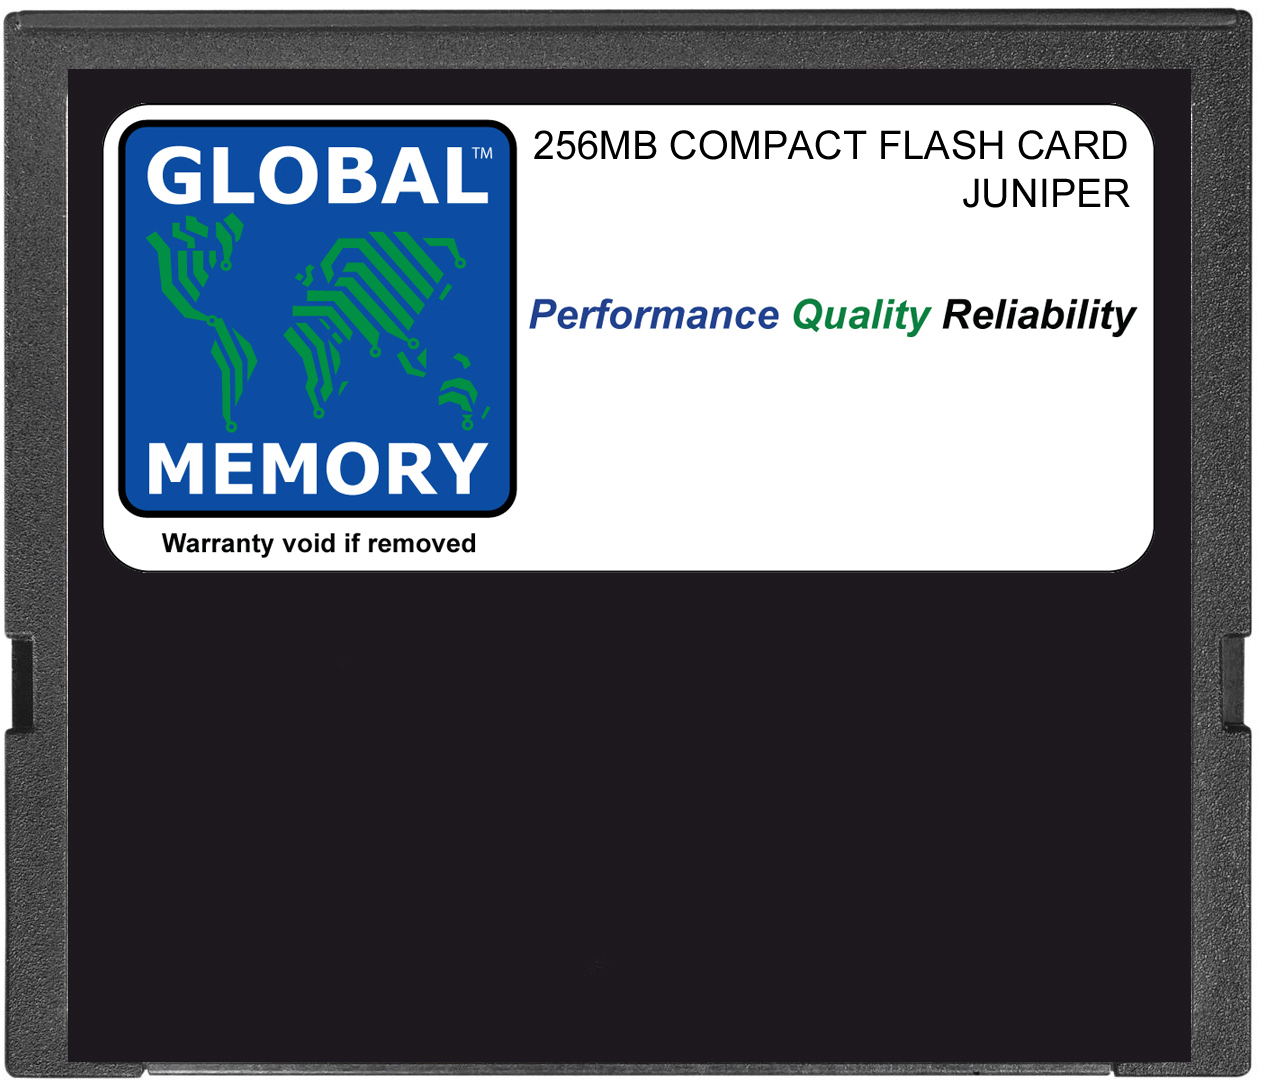 256MB COMPACT FLASH CARD MEMORY FOR JUNIPER J2300 / J4300 / J6300 SERIES ROUTERS (JX-CF-256M-S)